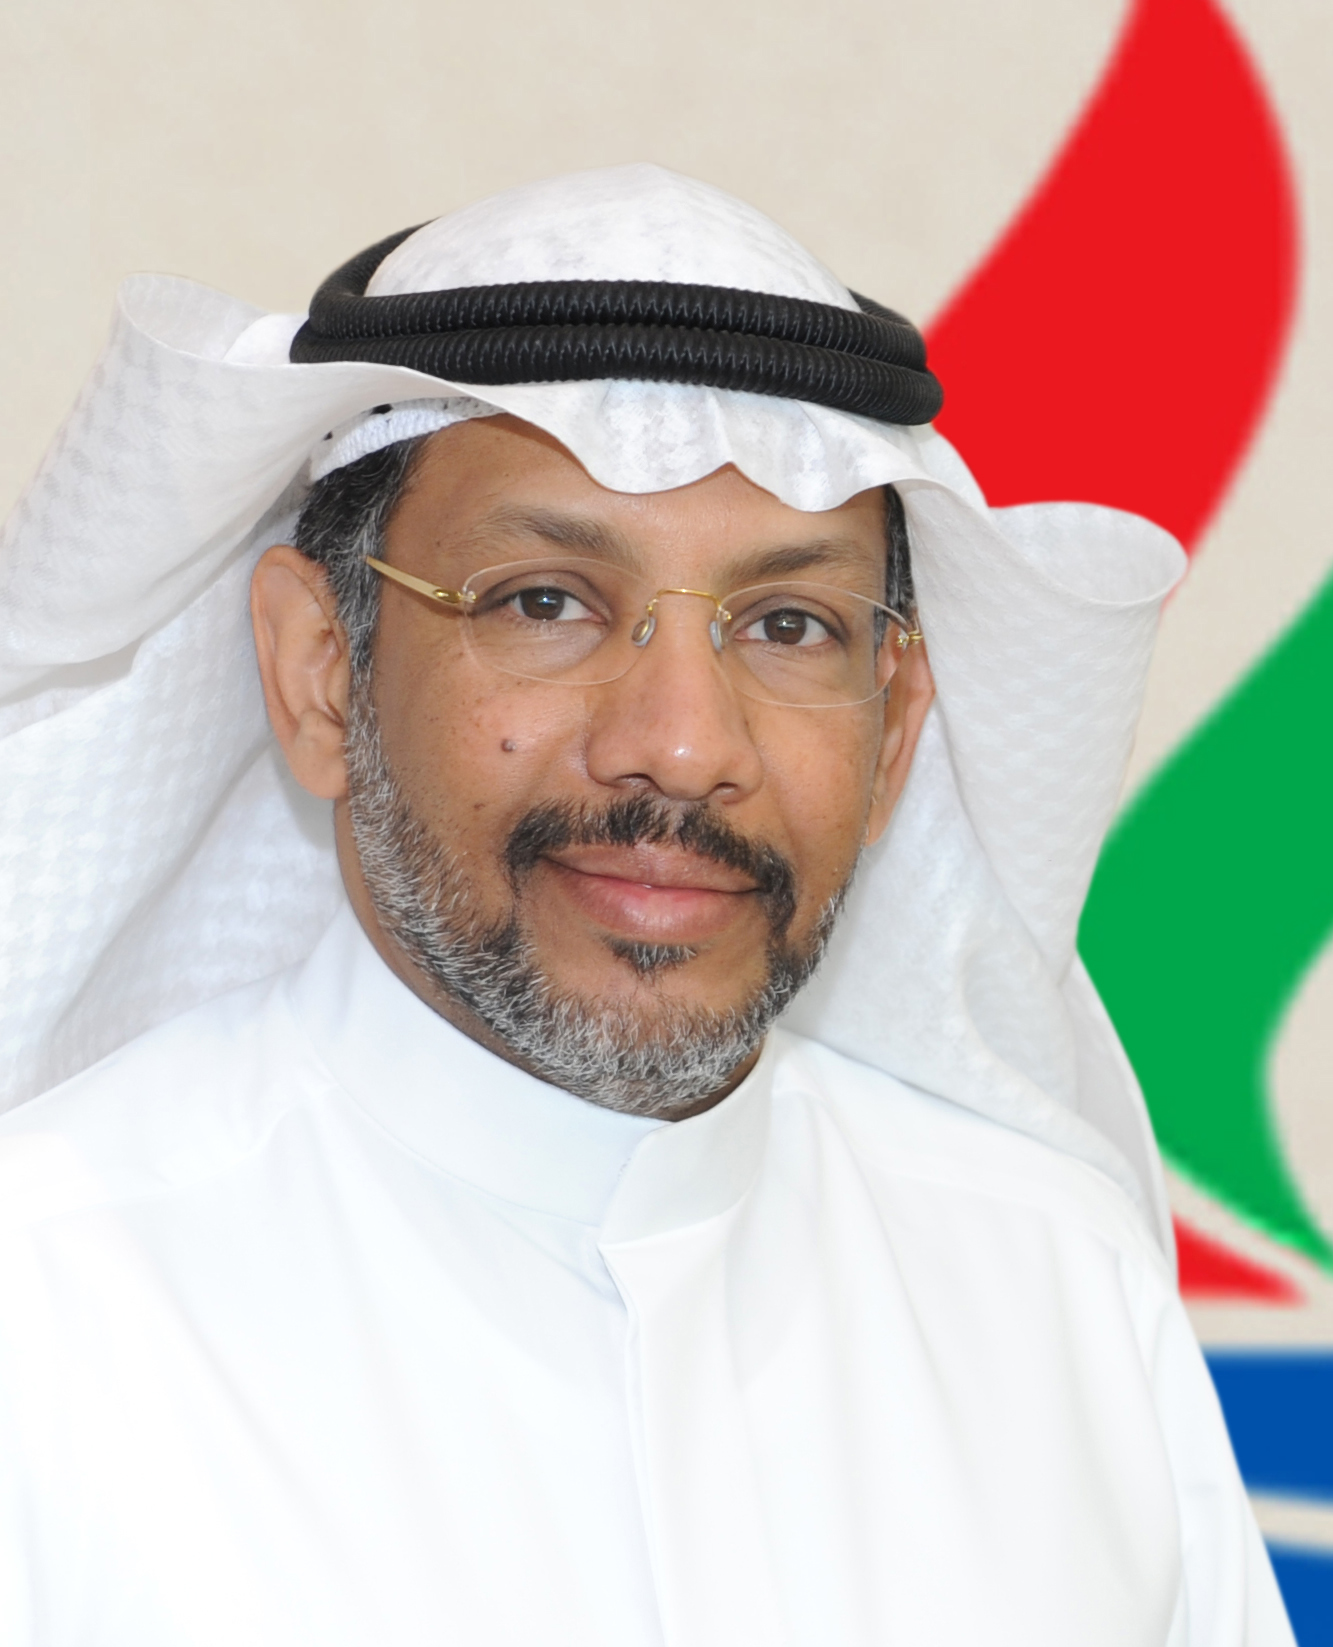 The KOC's CEO Eng. Mohammad Al-Mutairi